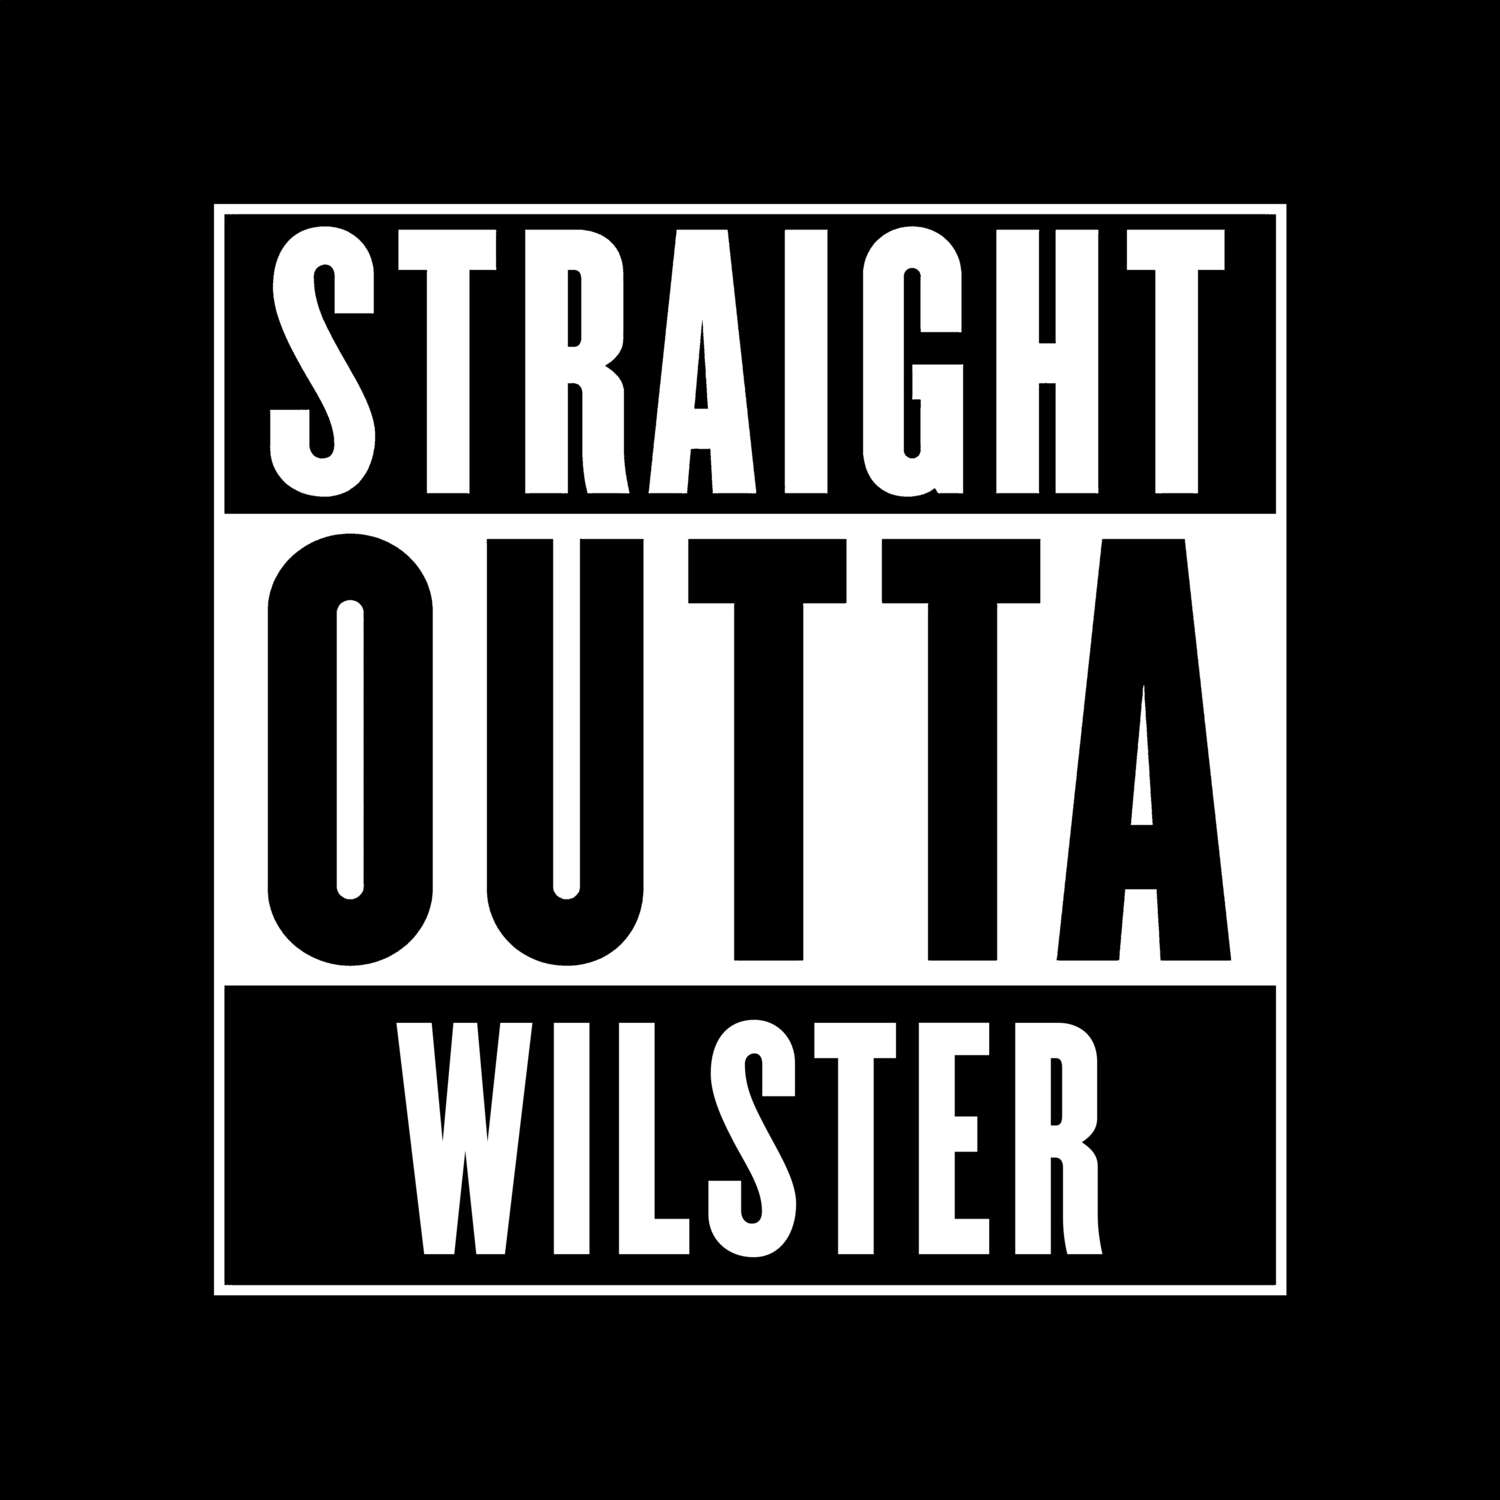 Wilster T-Shirt »Straight Outta«